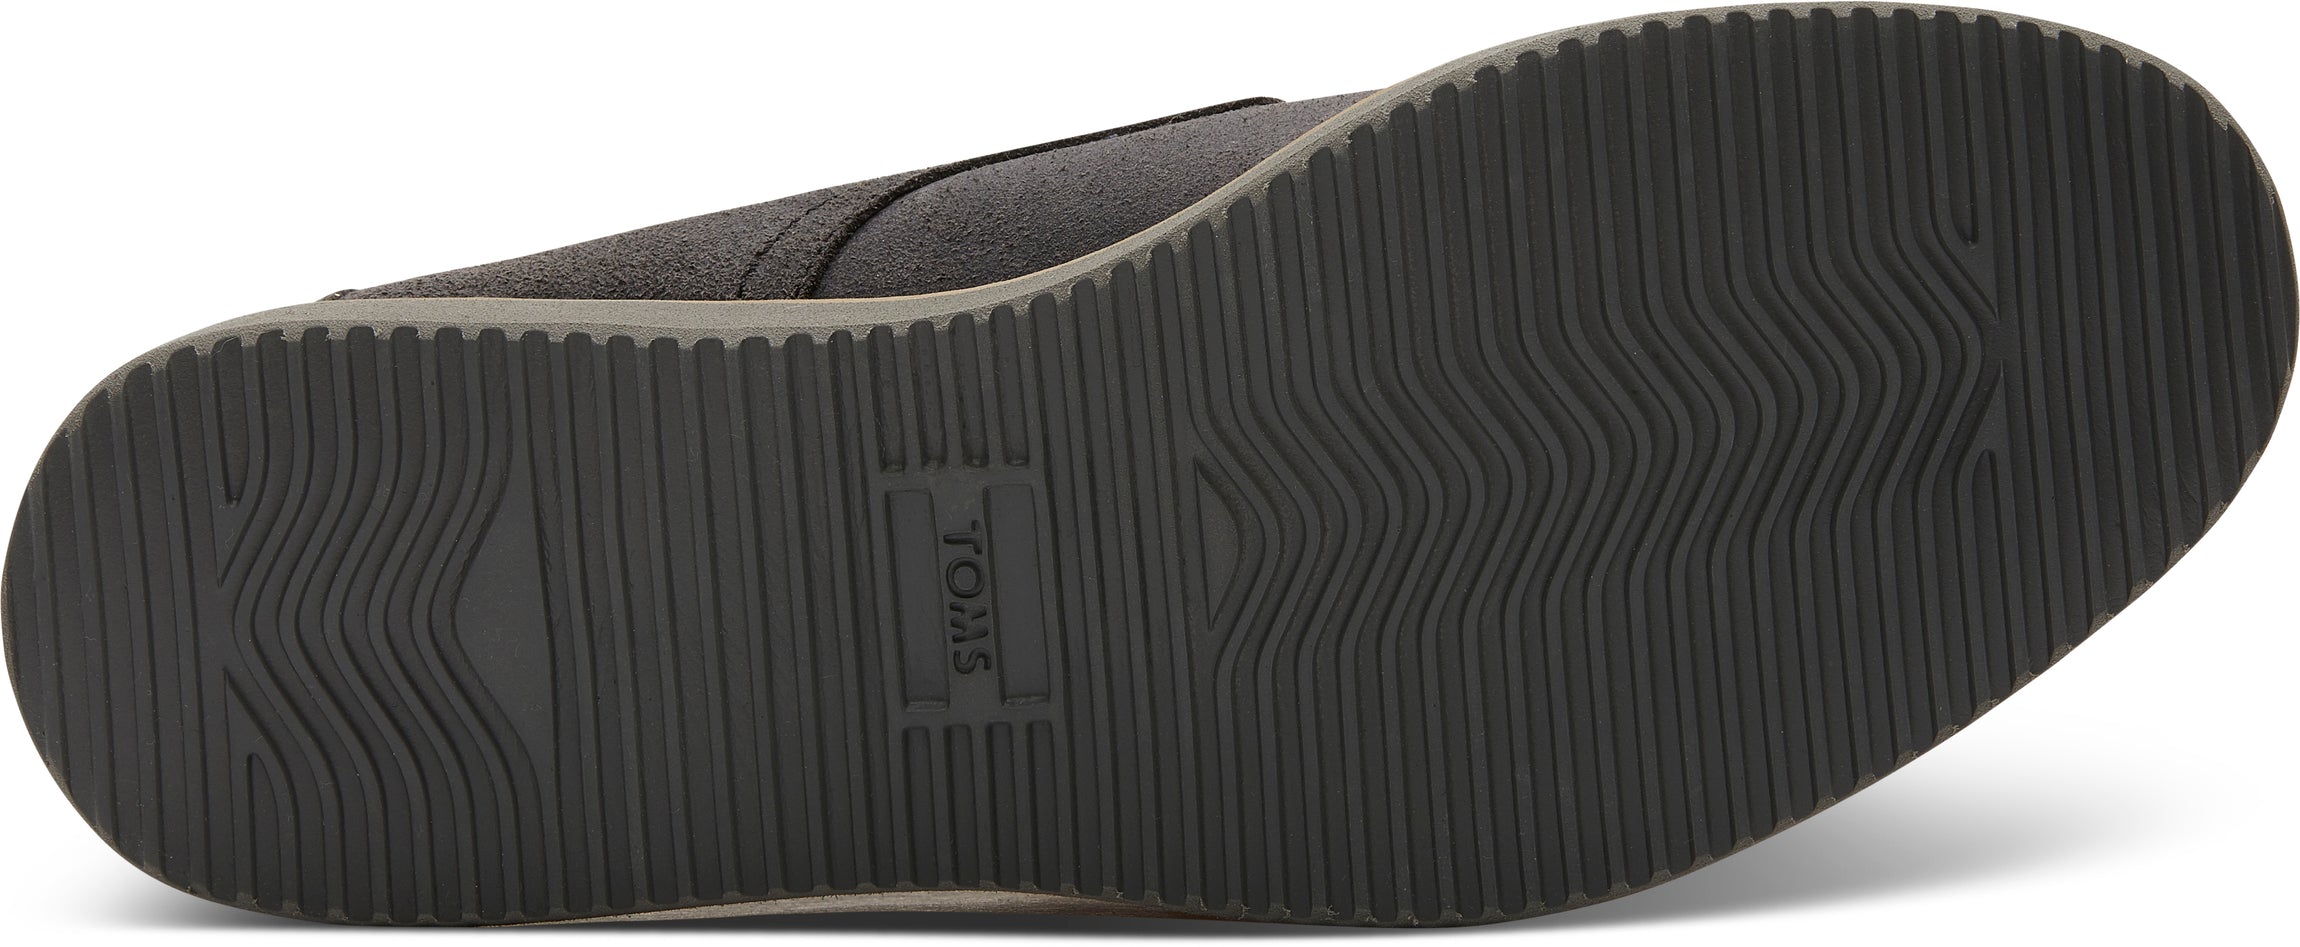 Pánske čierne členkové topánky TOMS Porter